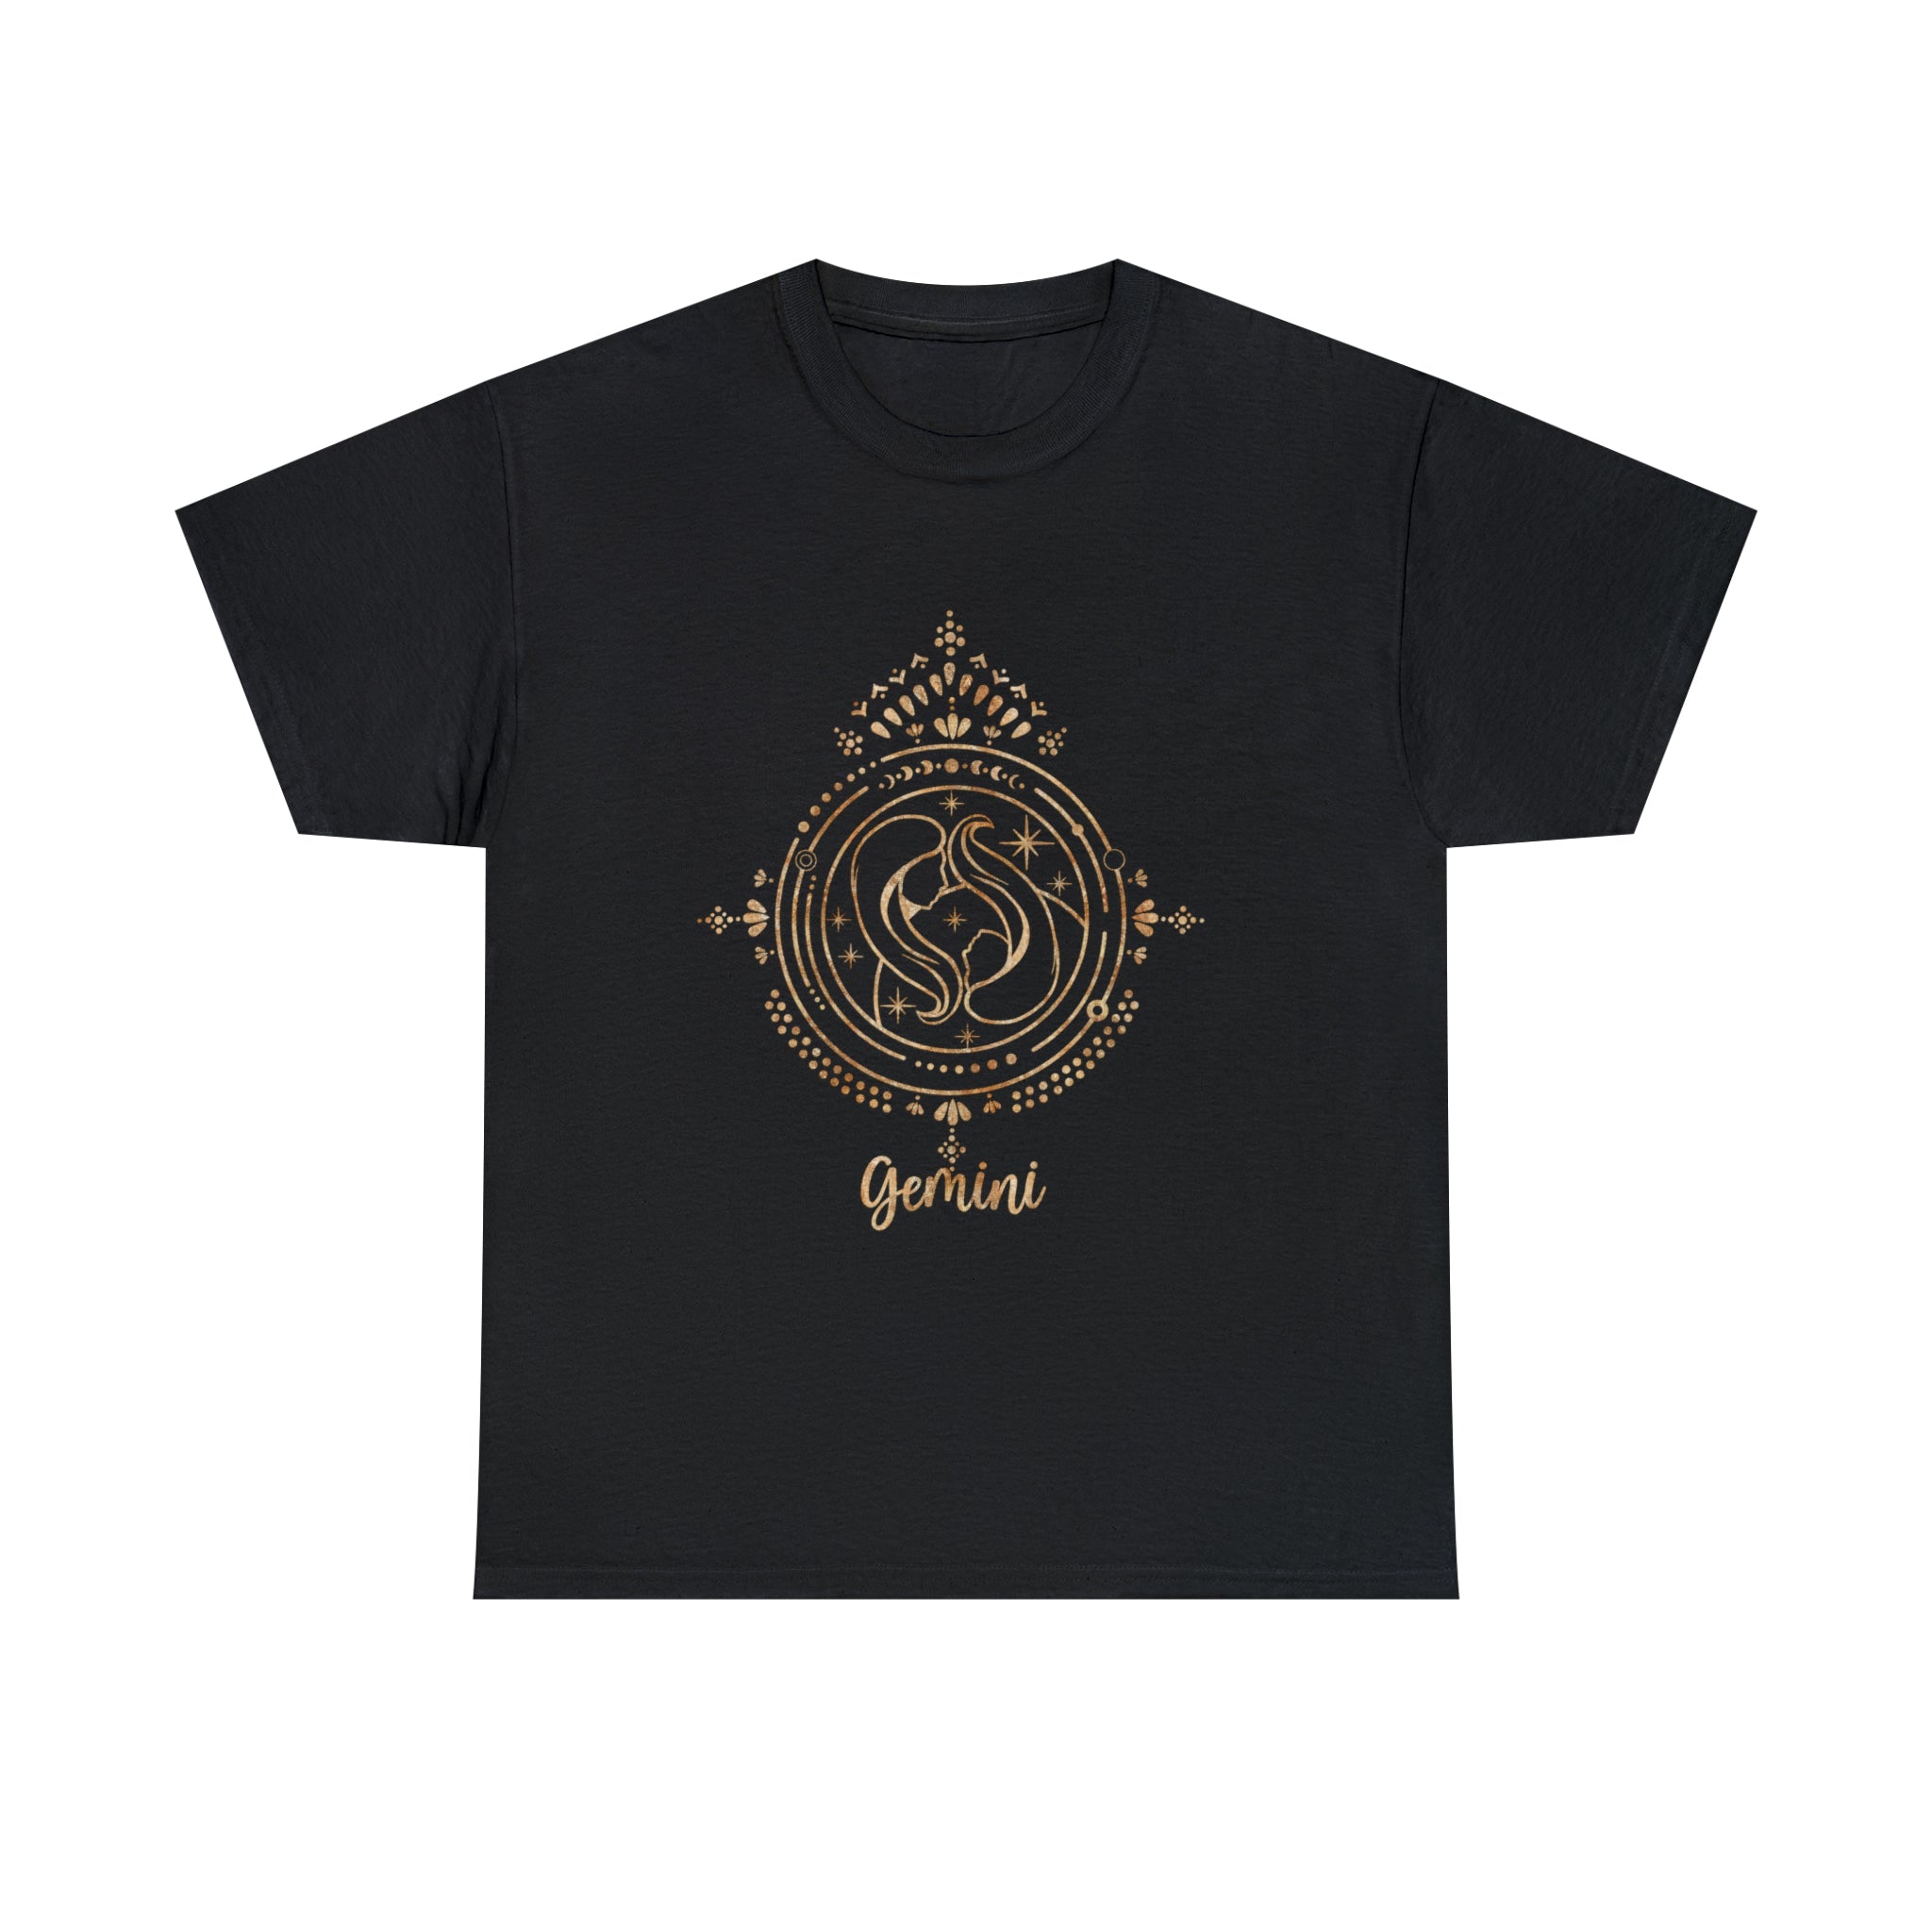 A Gemini T-Shirt featuring gold text.